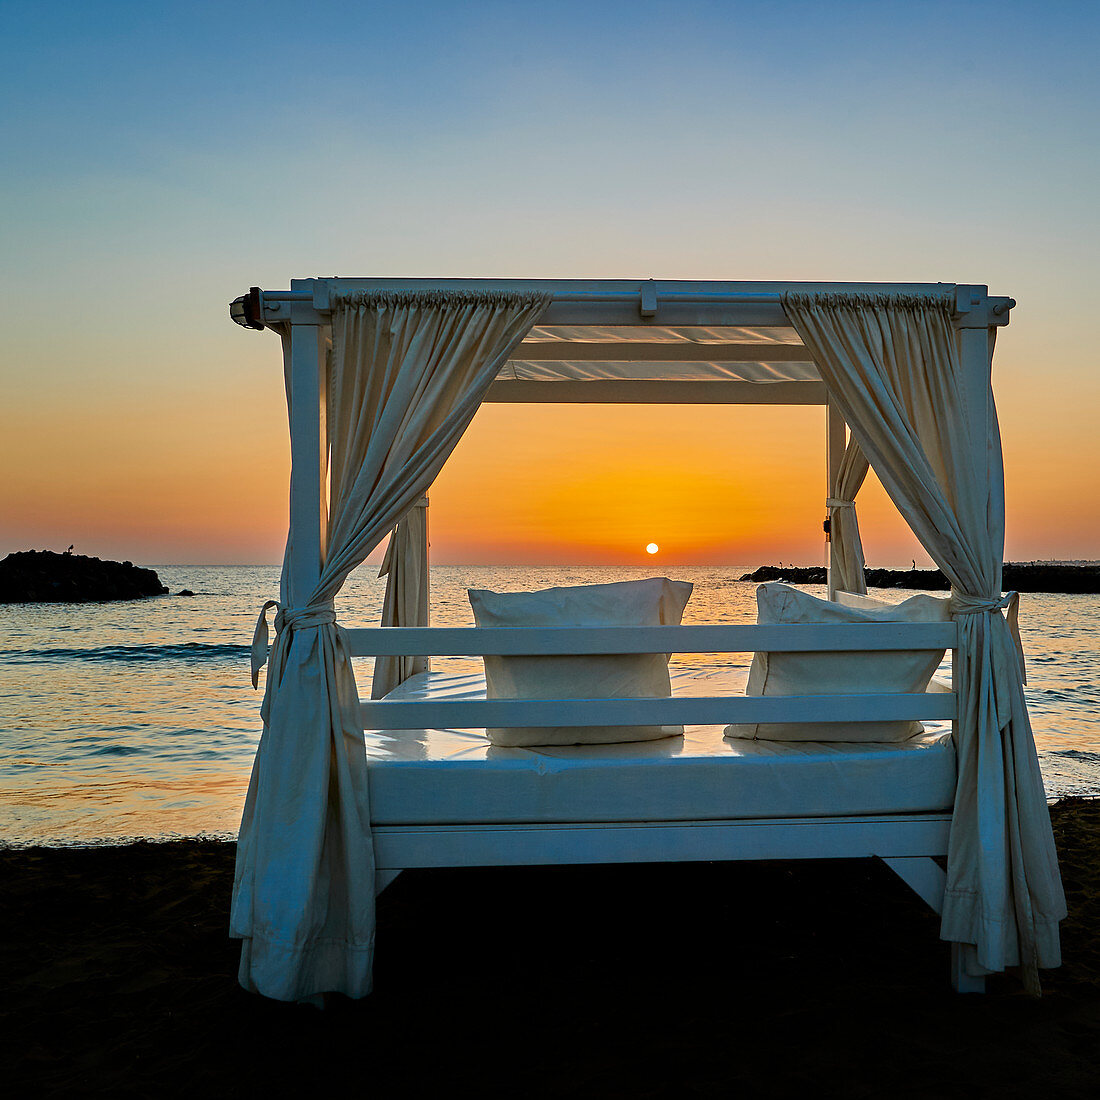 Sunrise at Heraklion, Crete, Greece